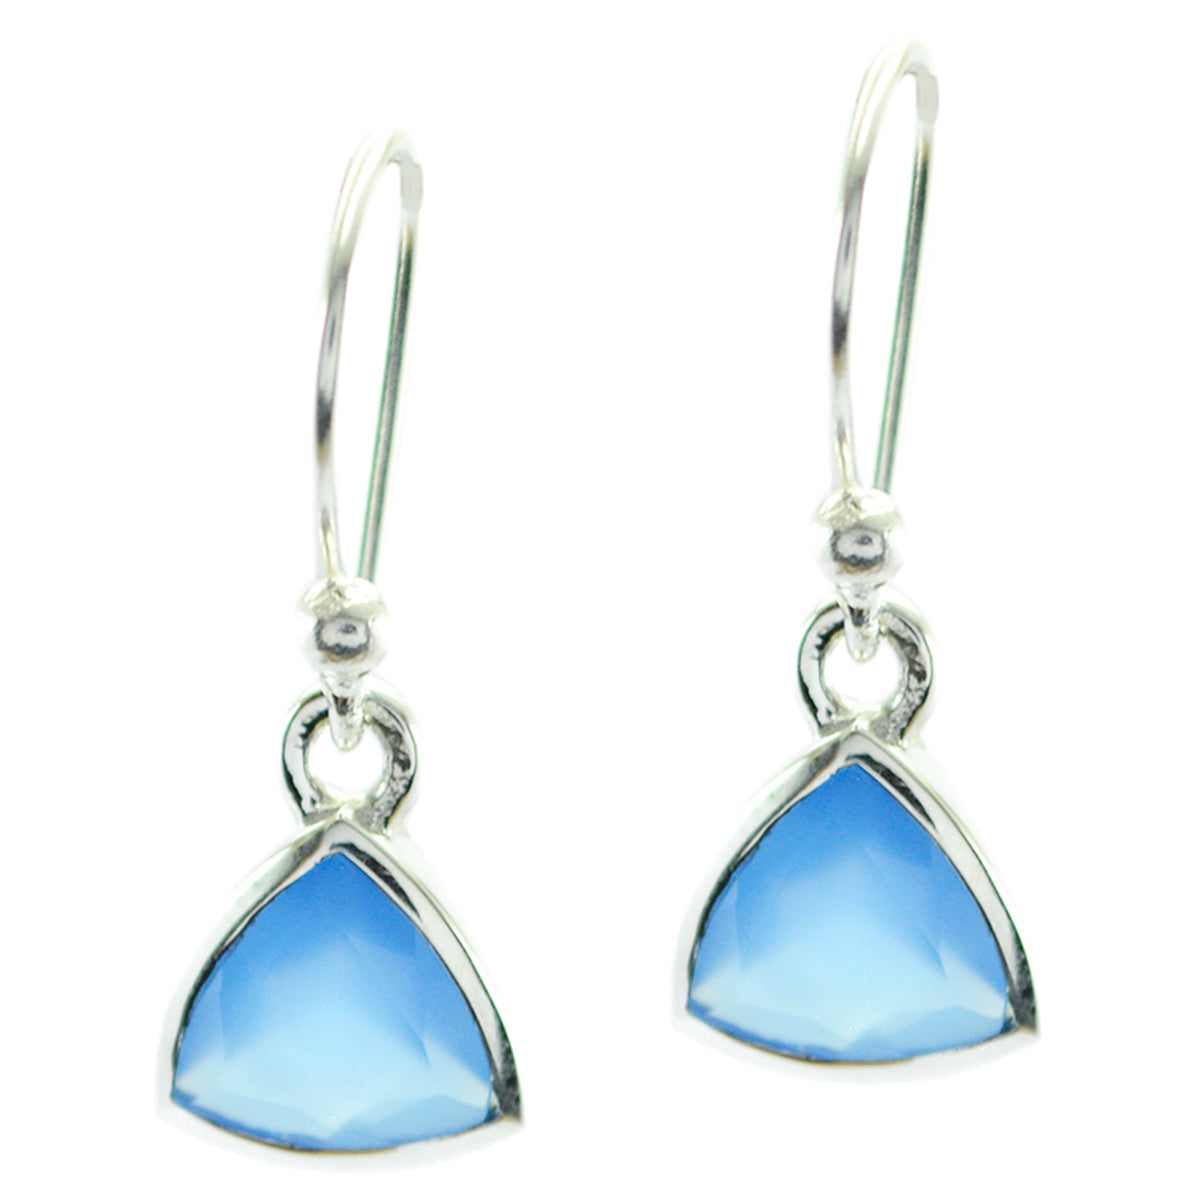 Riyo Genuine Gems trillion Faceted Blue Chalcedony Silver Earrings gift for wedding